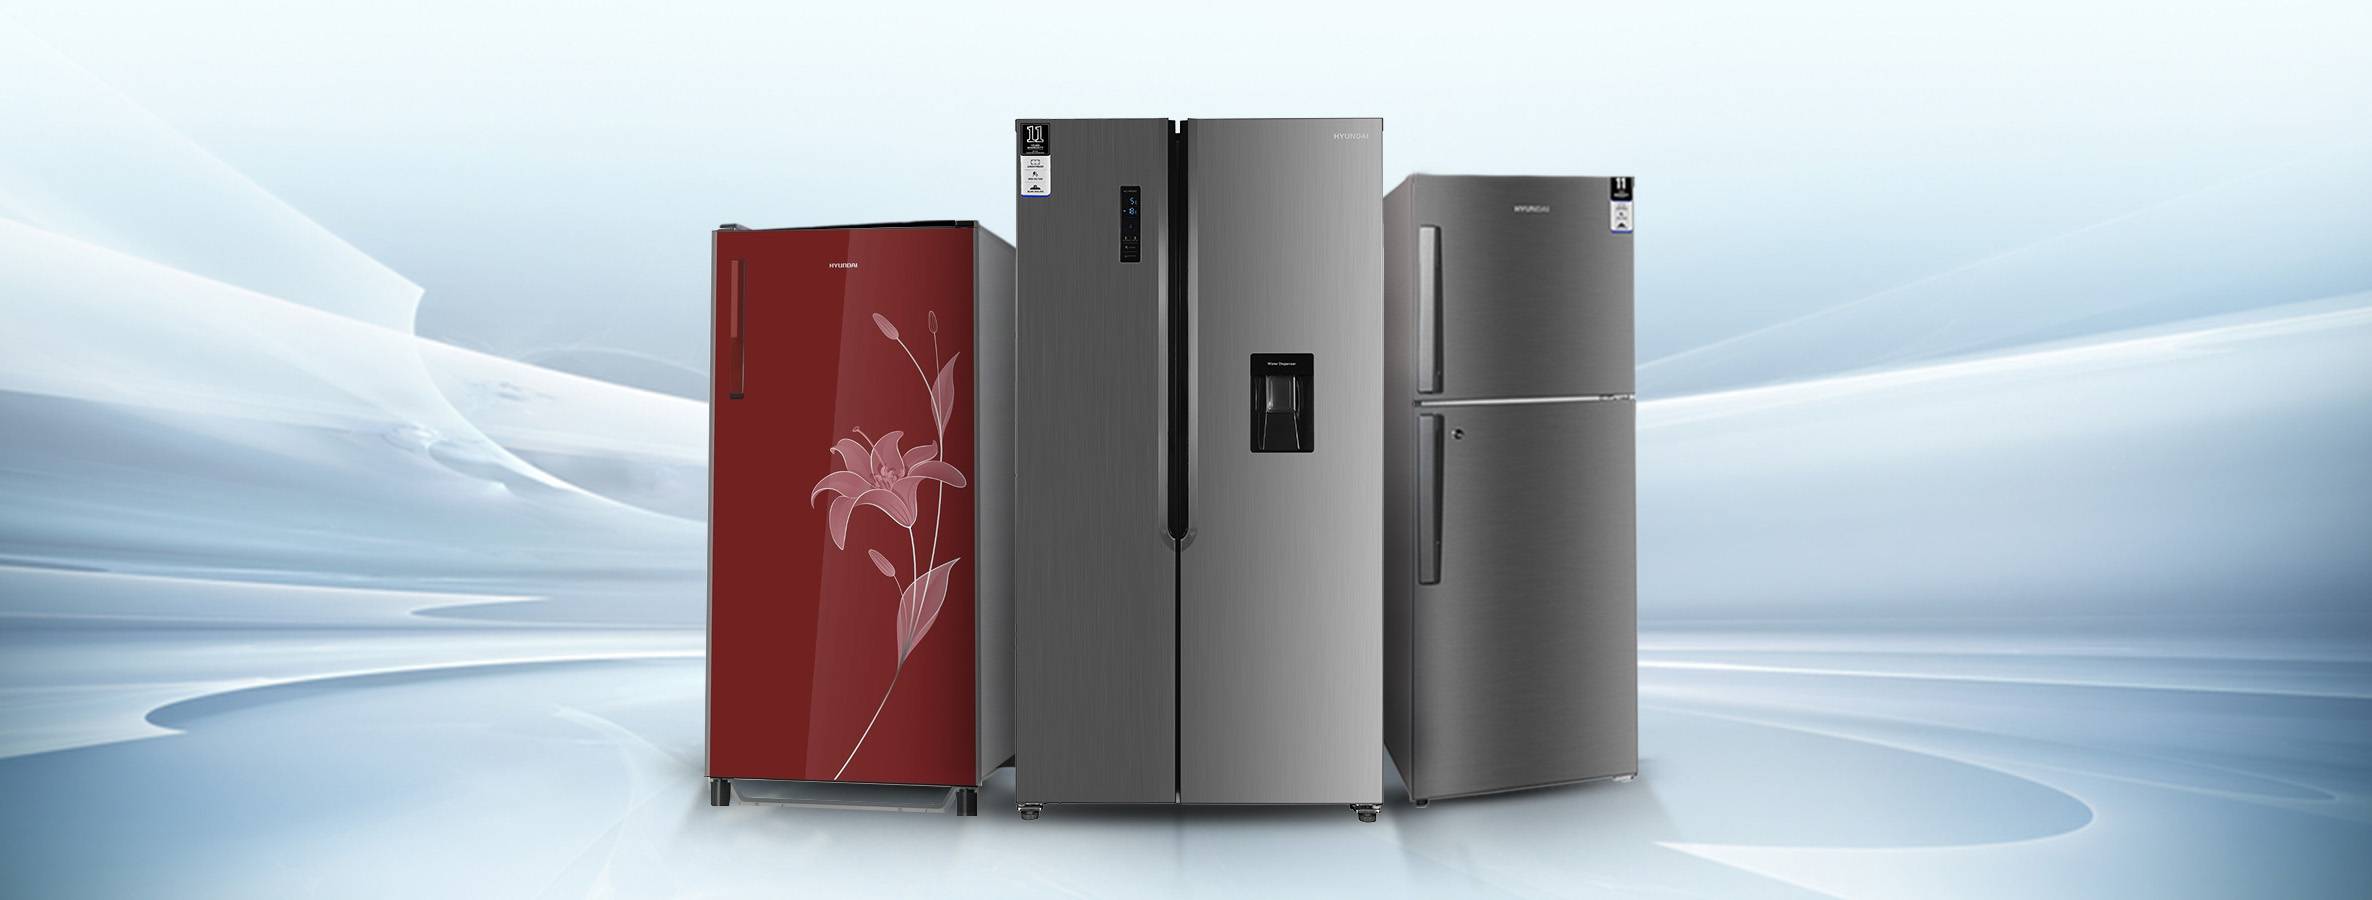 Refrigerator in Nepal